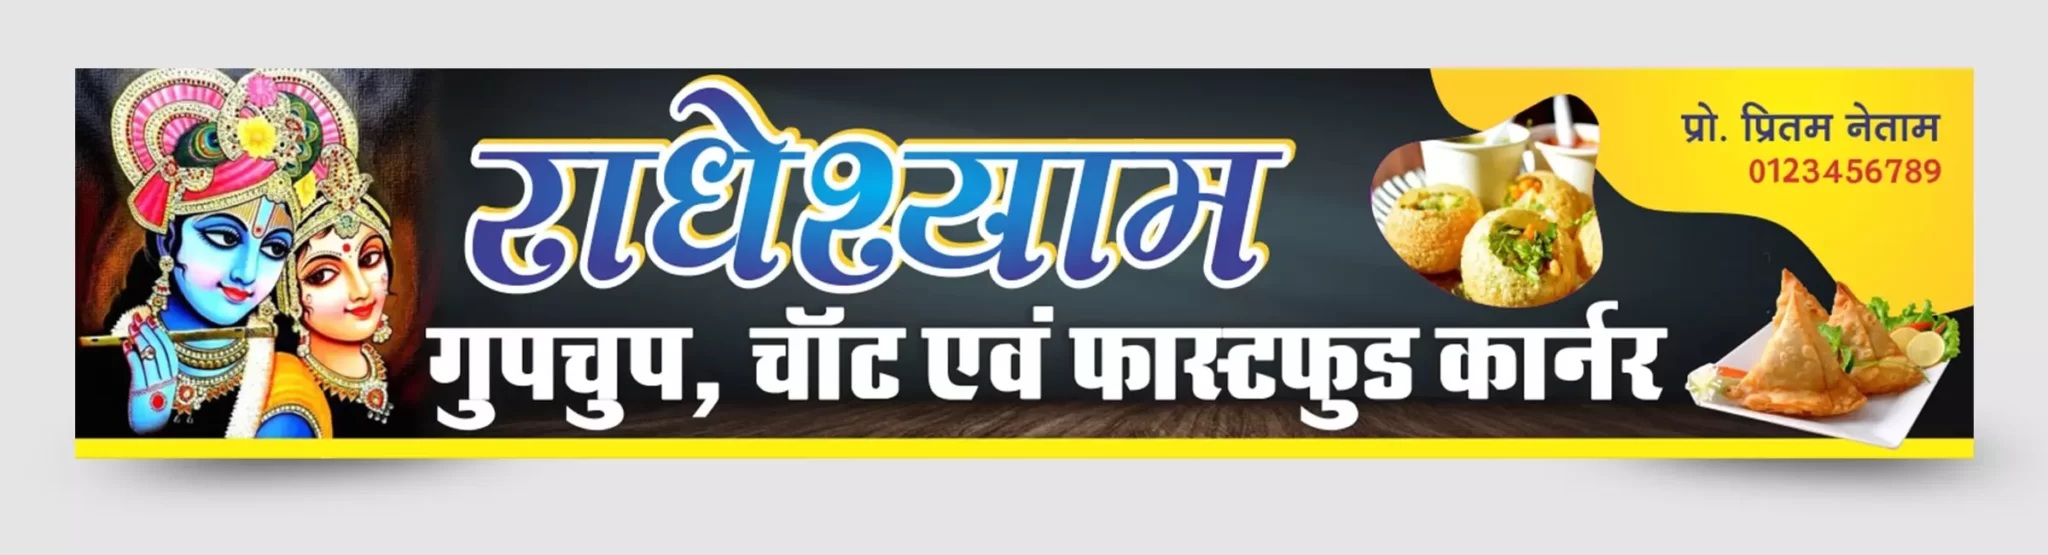 Gupchup Chat Panipuri flex banner template - Free Hindi Design